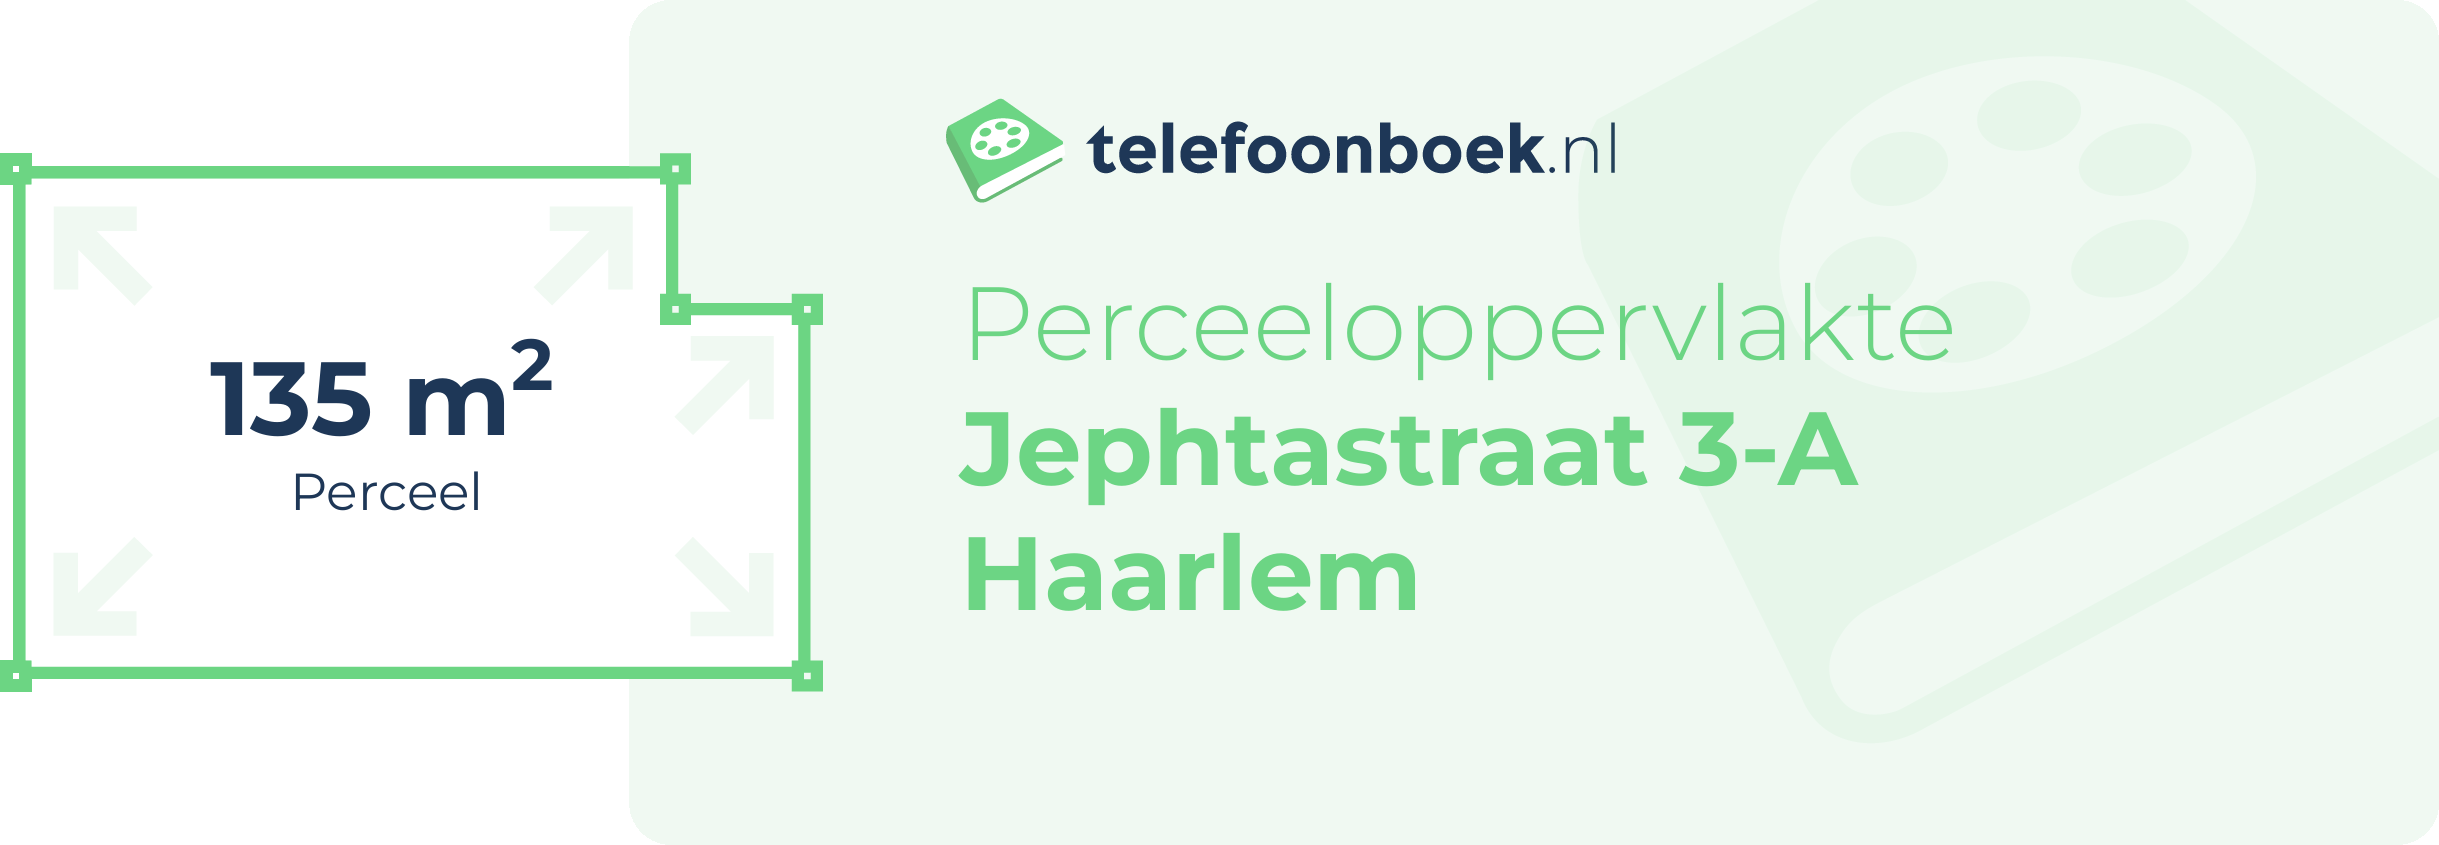 Perceeloppervlakte Jephtastraat 3-A Haarlem